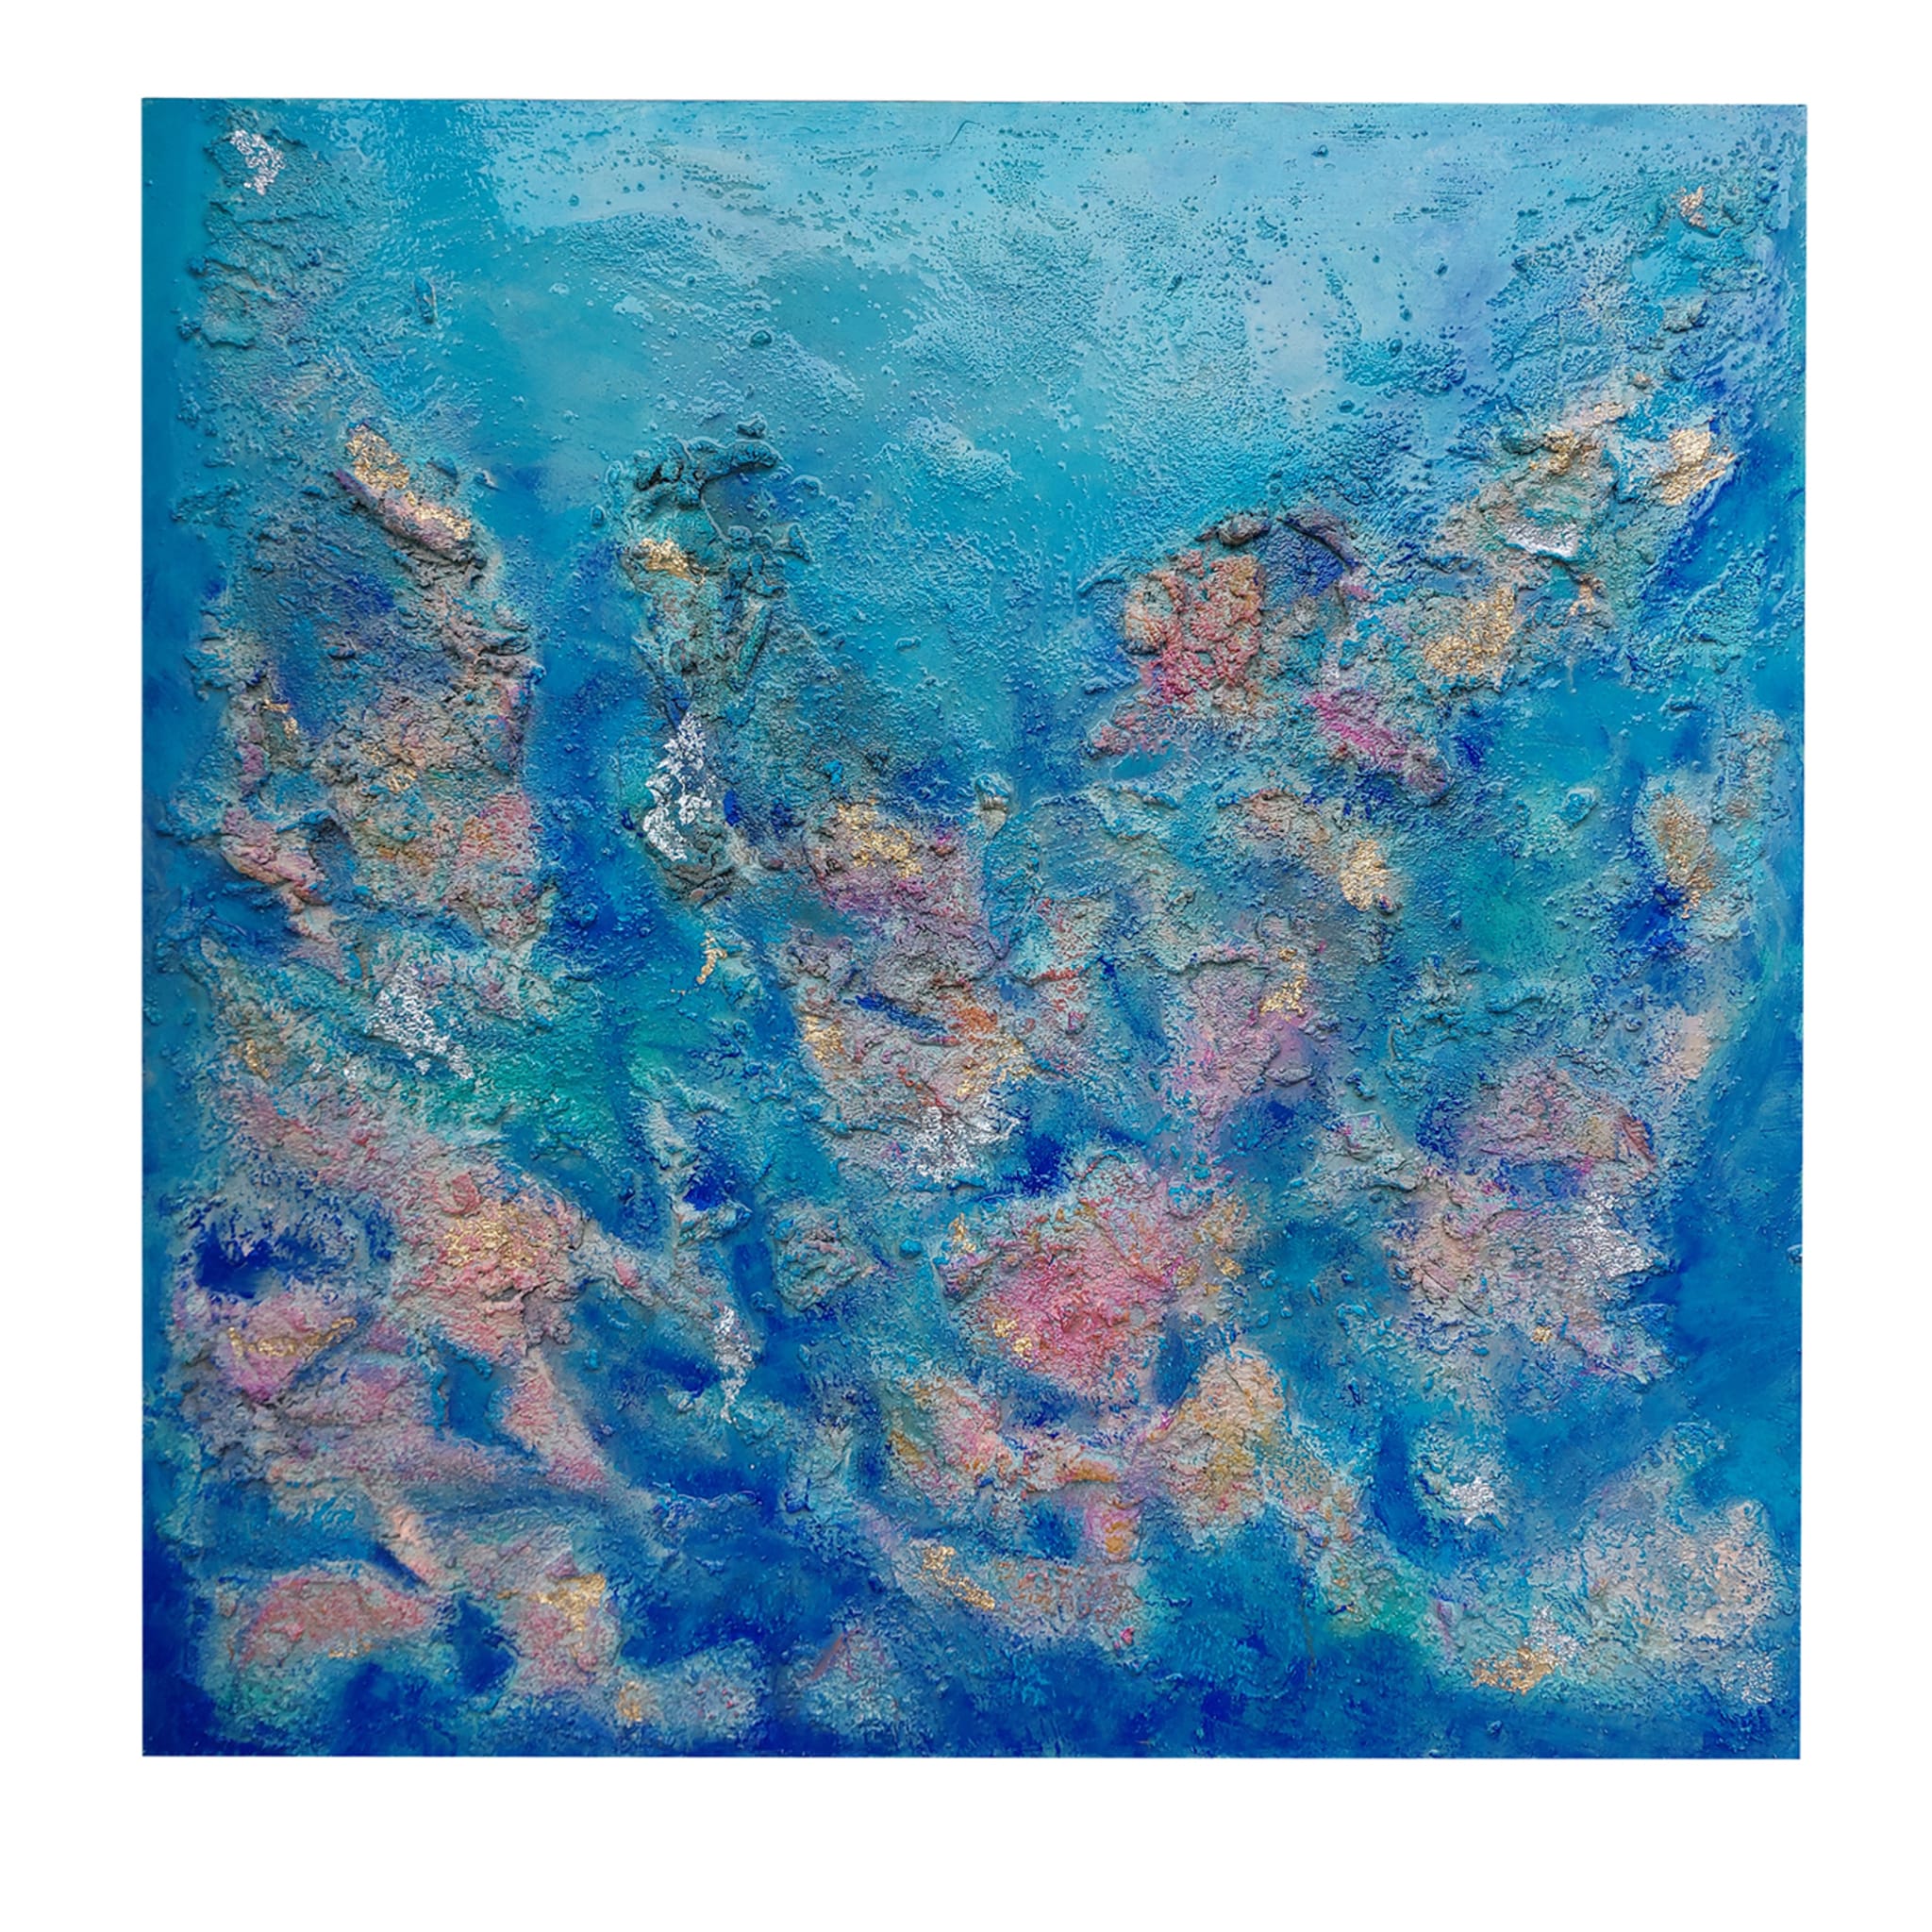 Korallengärten Mixed-Media-Gemälde - Hauptansicht